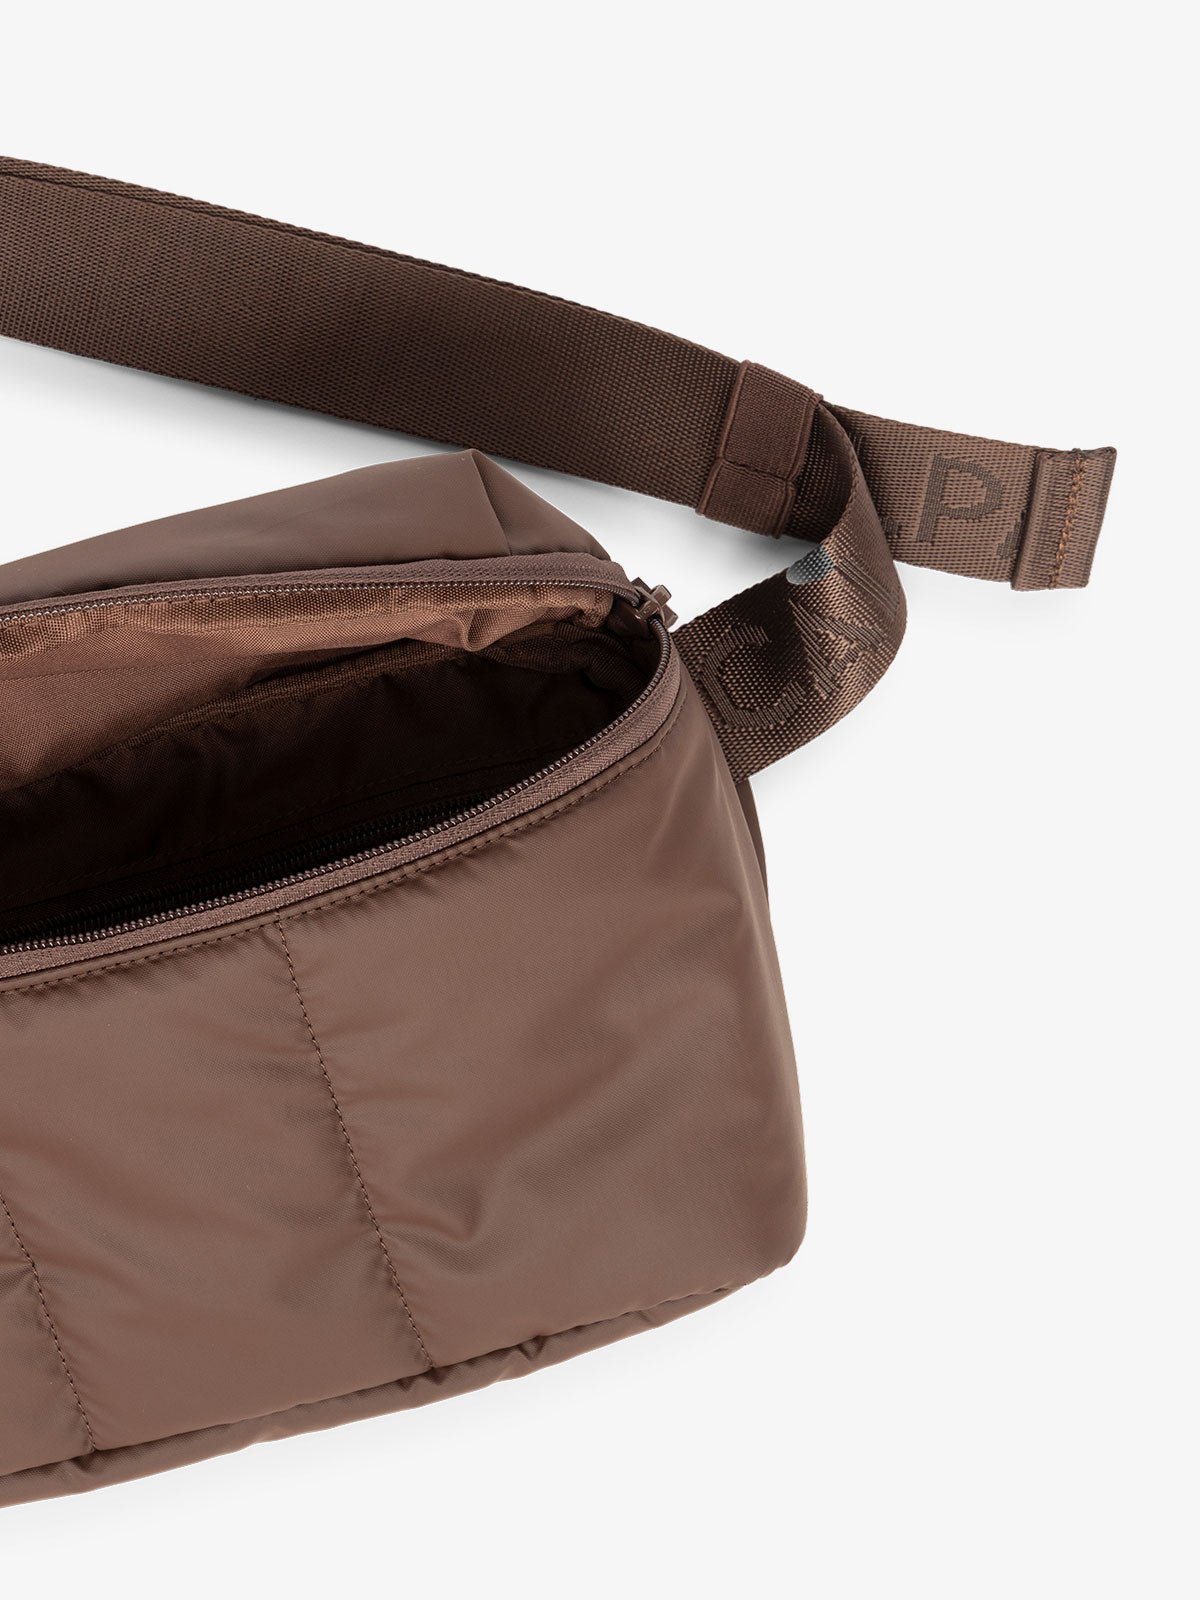 CALPAK Luka Belt Bag close up interior and strap in dark brown walnut